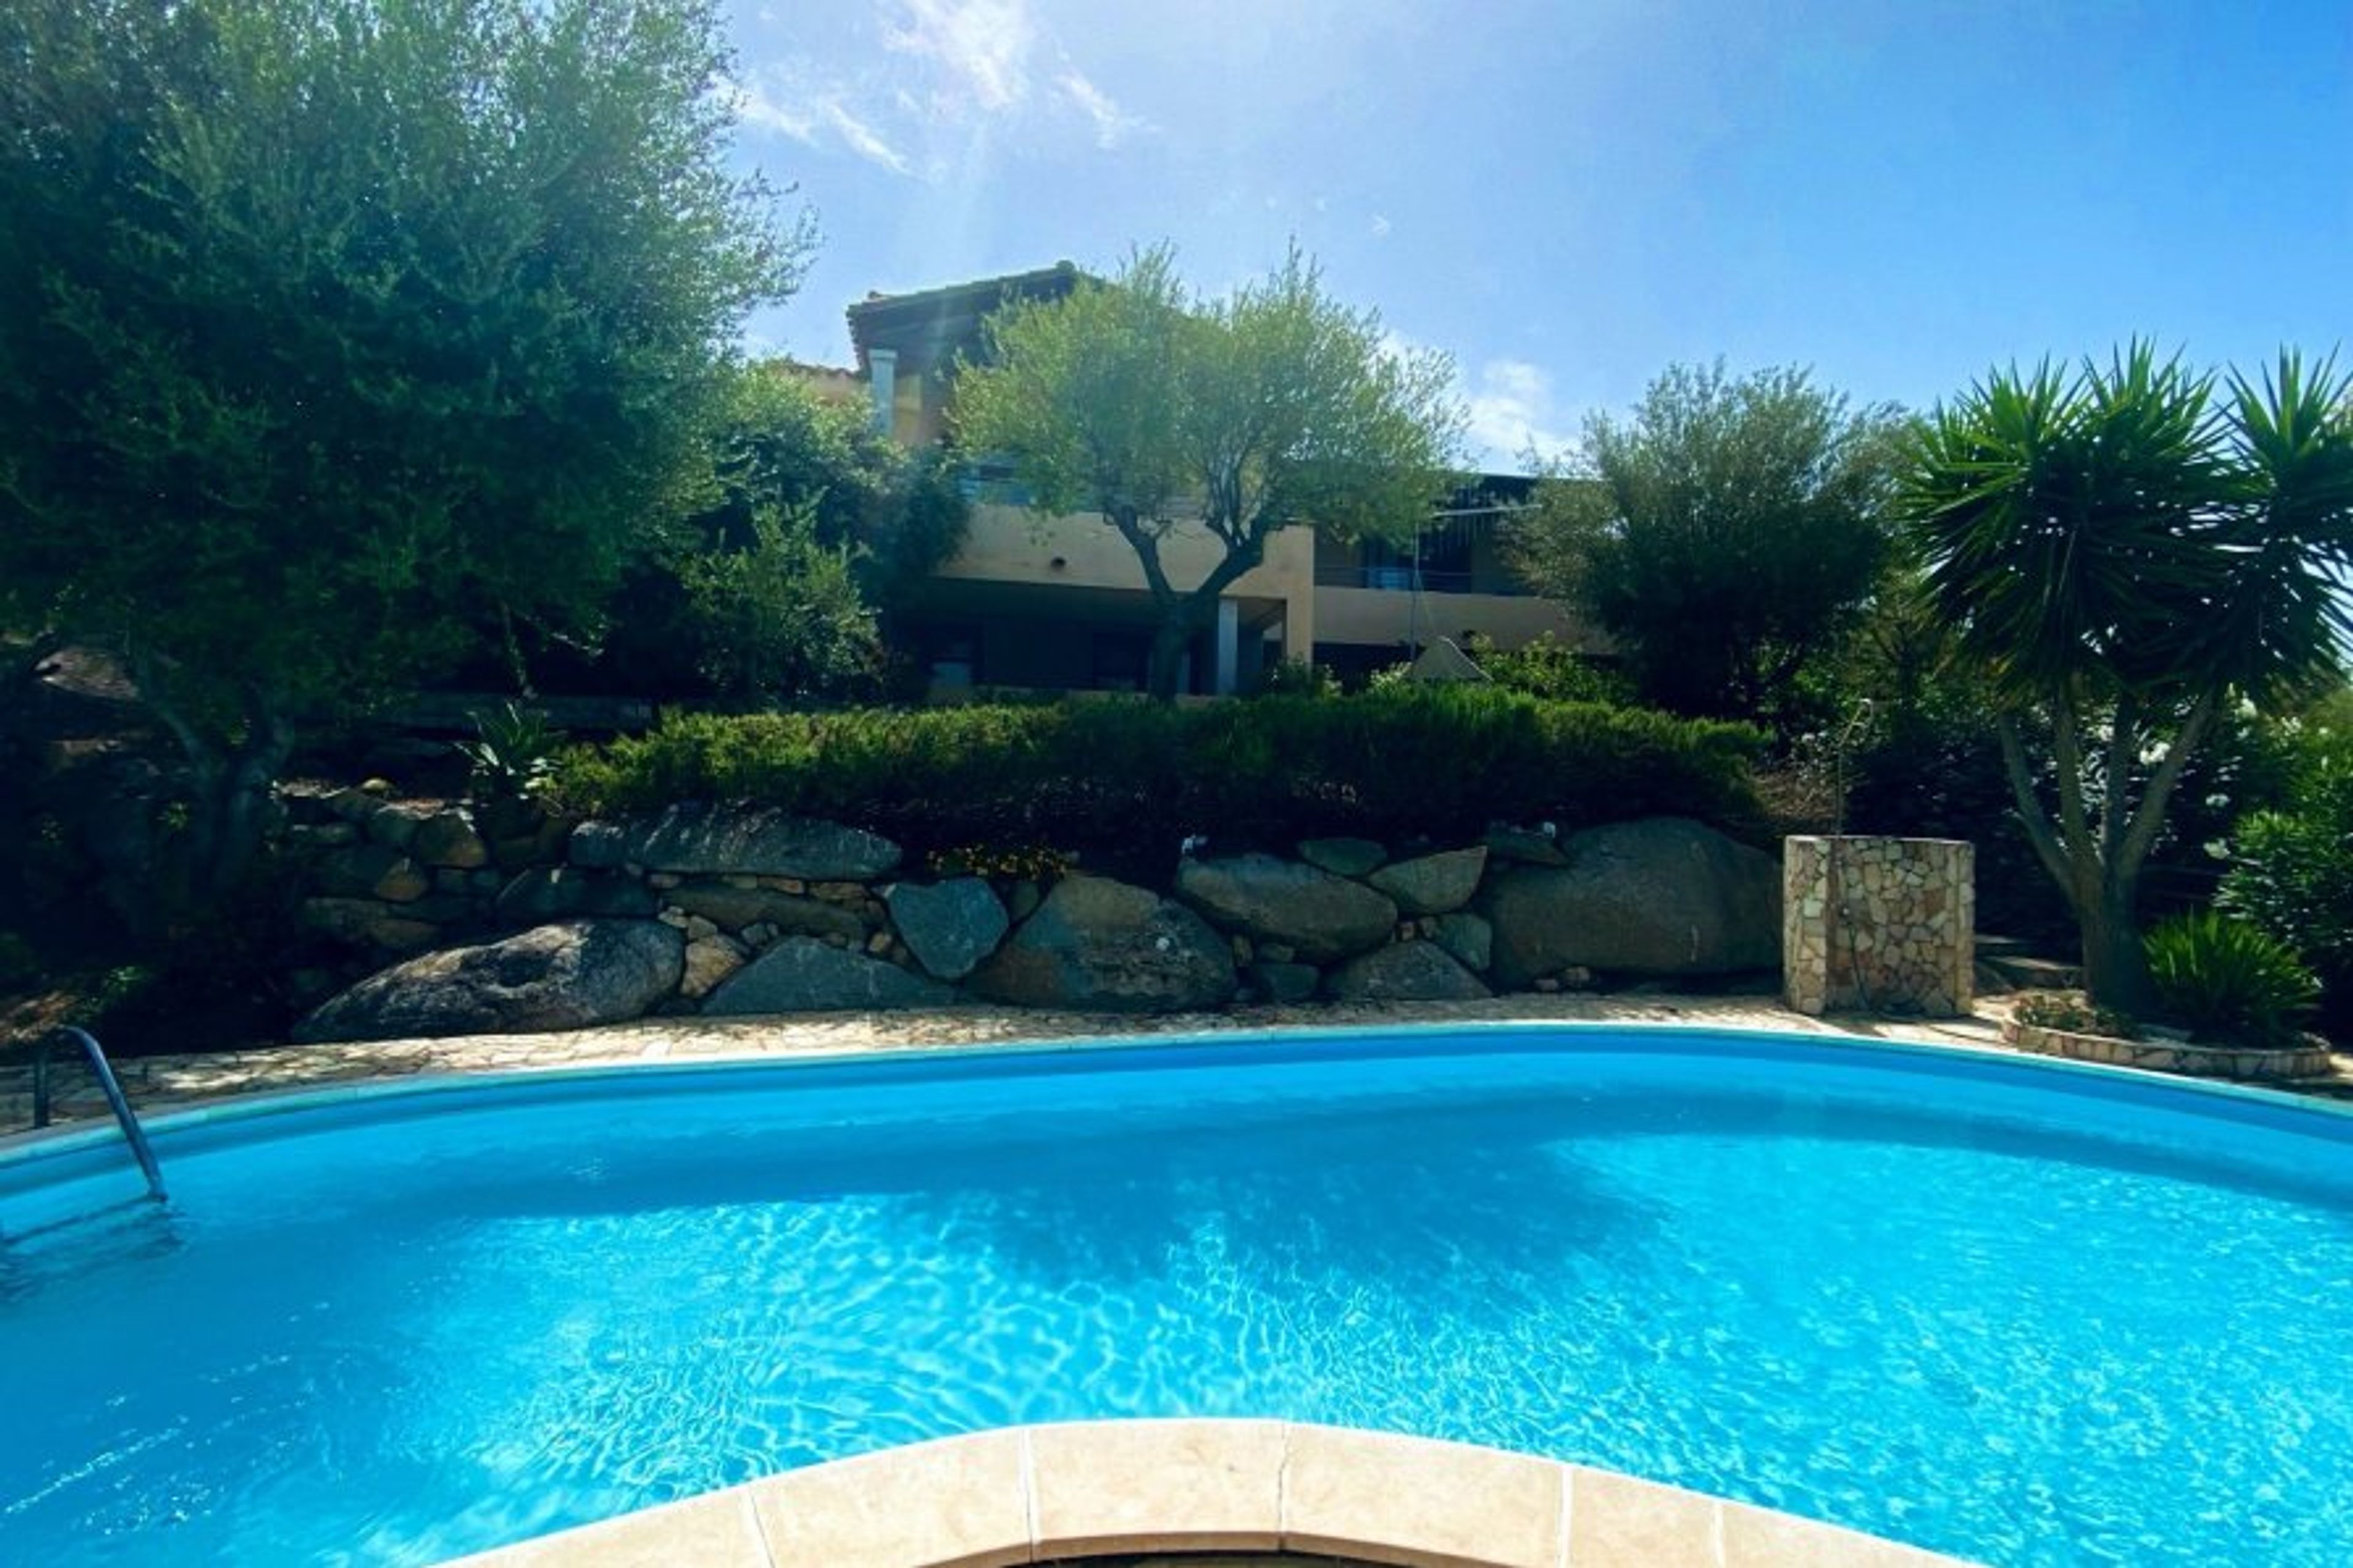 Villa Azzurra and its private pool